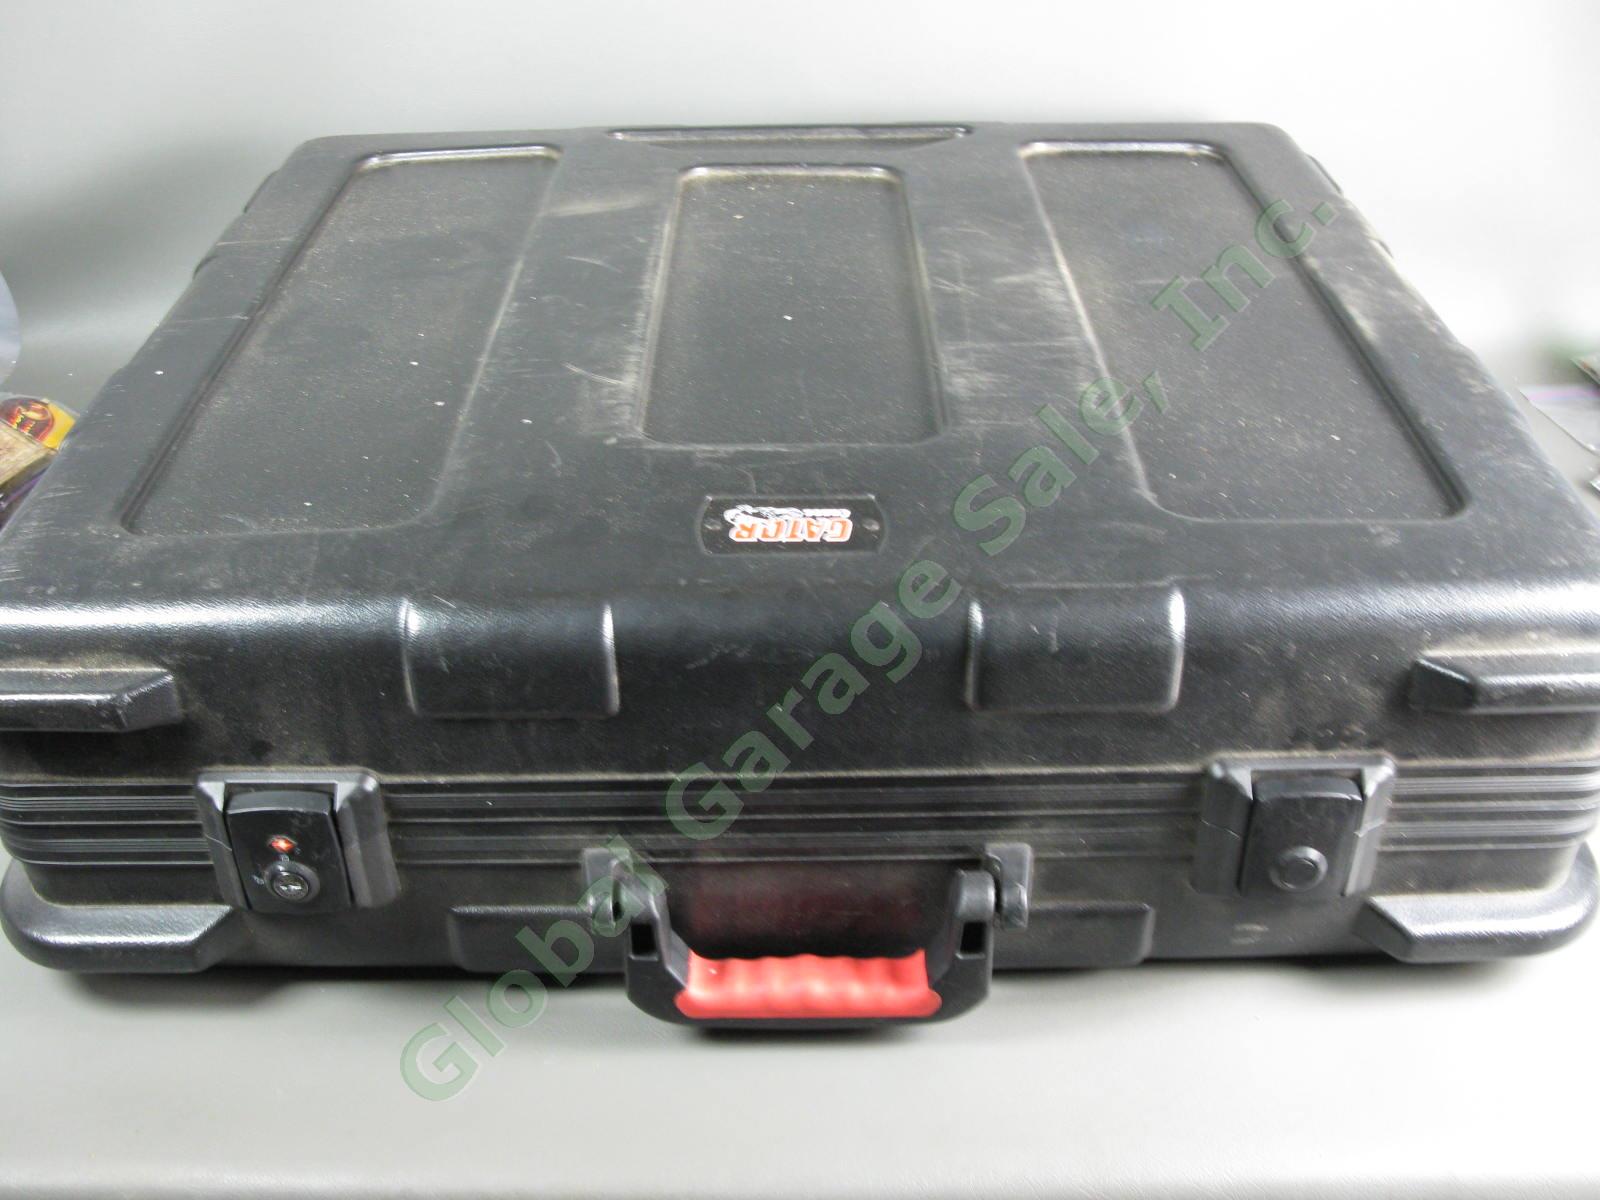 Yamaha 01V96 Digital Live Studio Mixing Console Mixer w/Gator Road Case & Manual 9